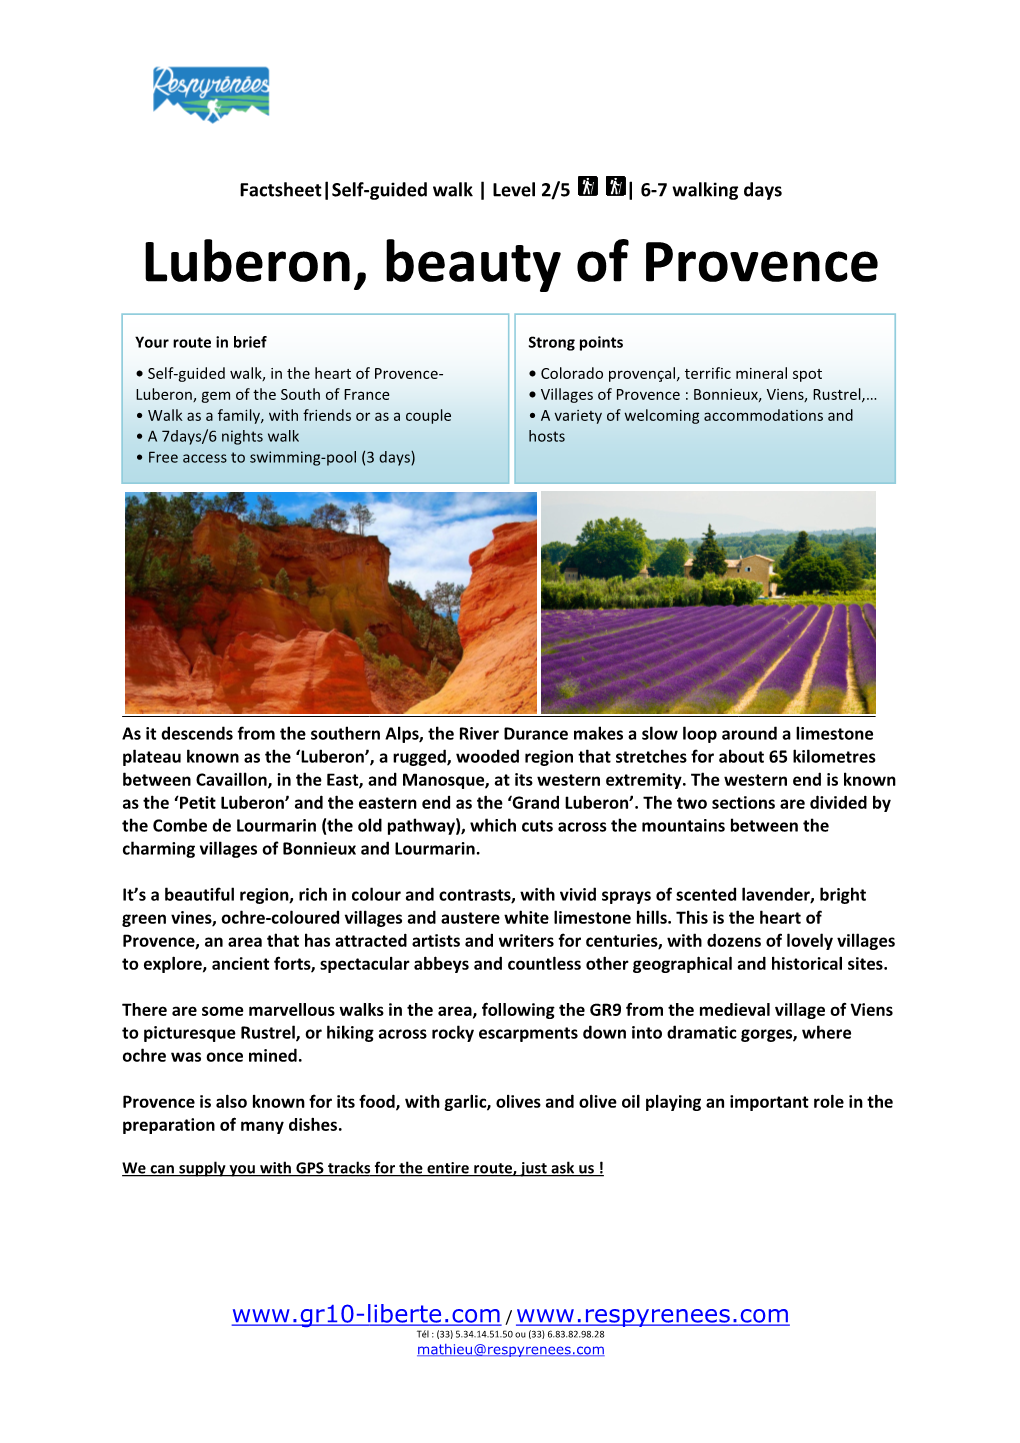 Luberon, Beauty of Provence